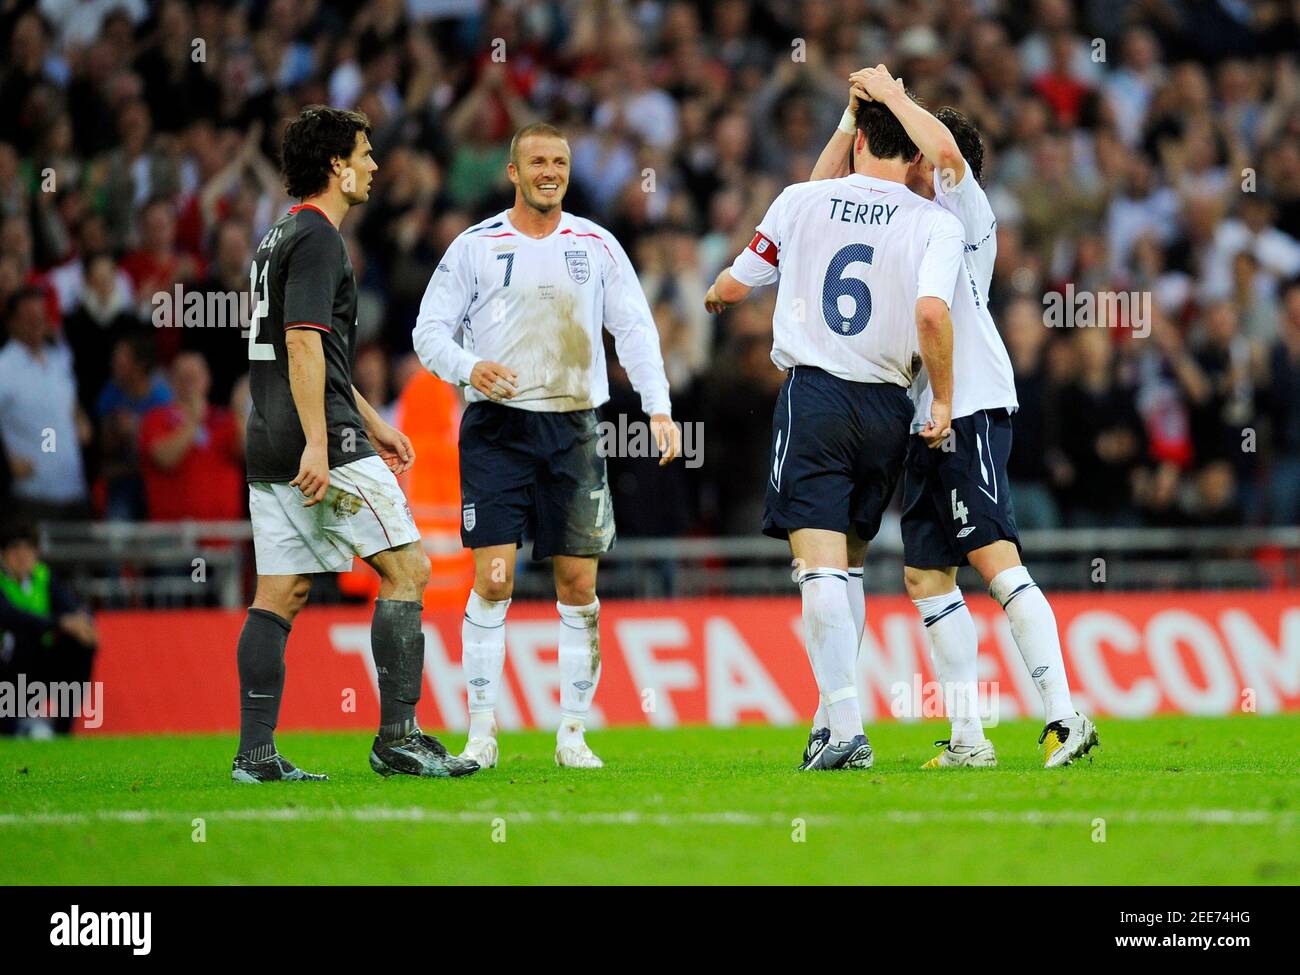 Calcio - Inghilterra v Stati Uniti d'America - International friendly -  Wembley Stadium - 28/5/08 John Terry celebra il primo gol per l'Inghilterra  con David Beckham (L) e Owen Hargreaves (R) Mandatory